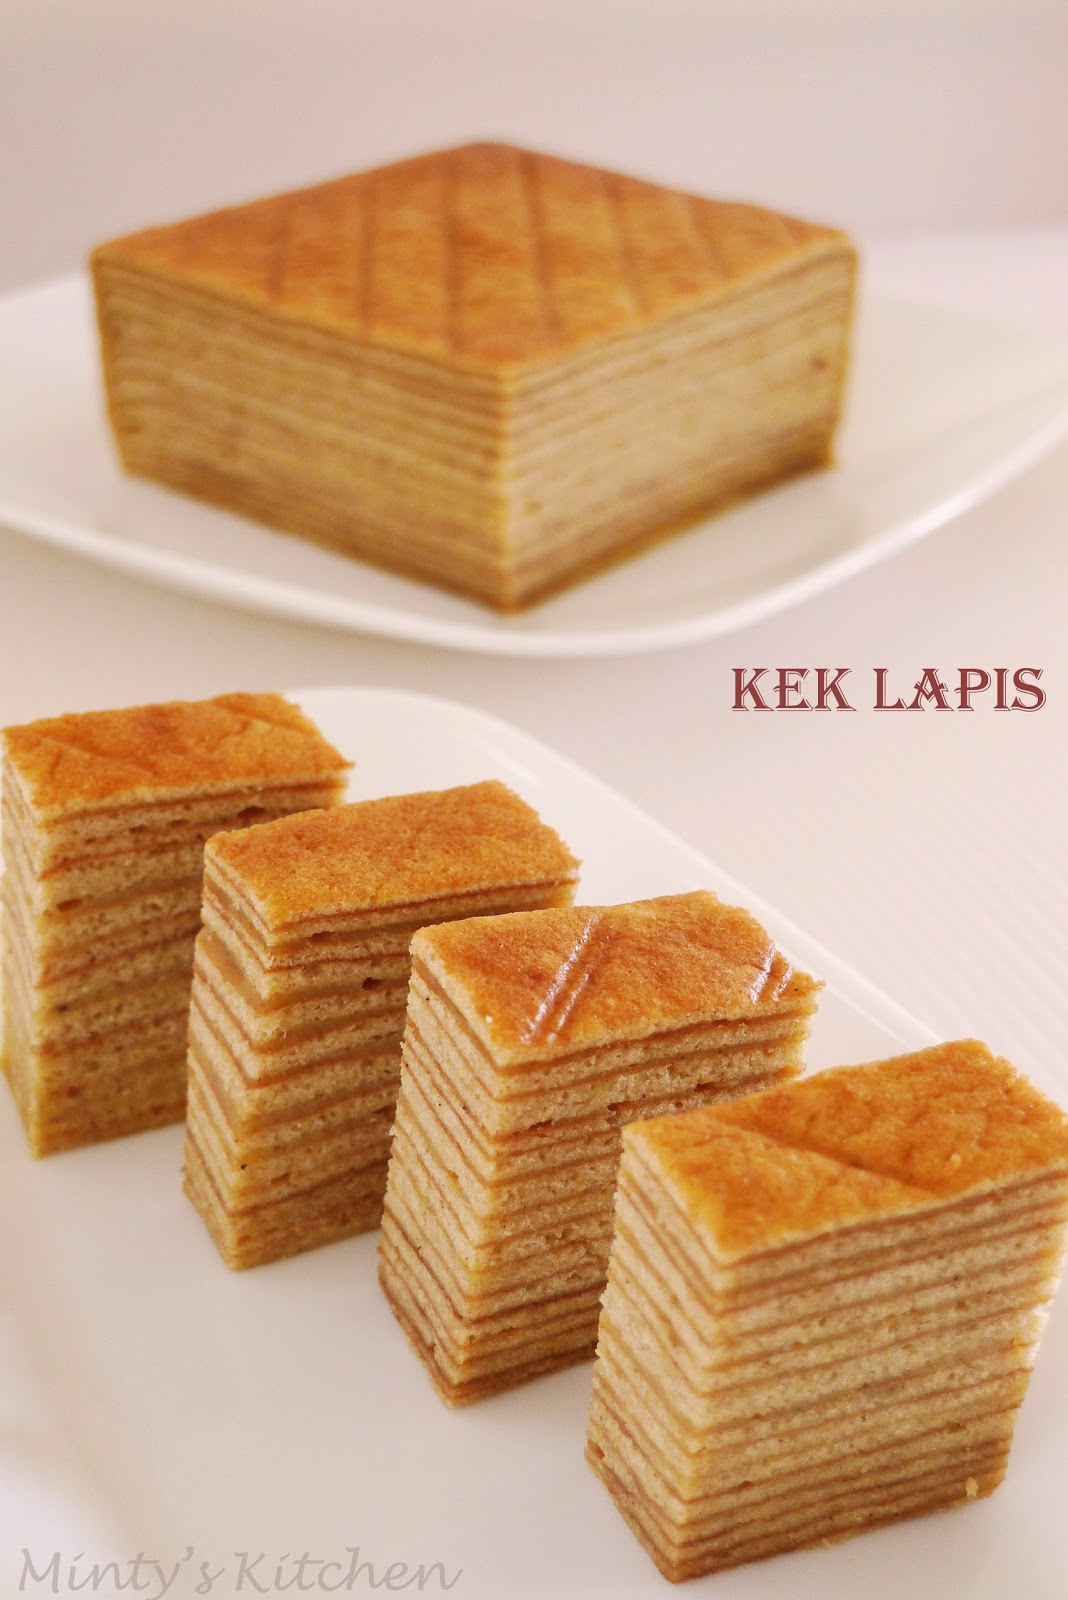 Minty's Kitchen: Indonesian Layer Cake / Kek Lapis